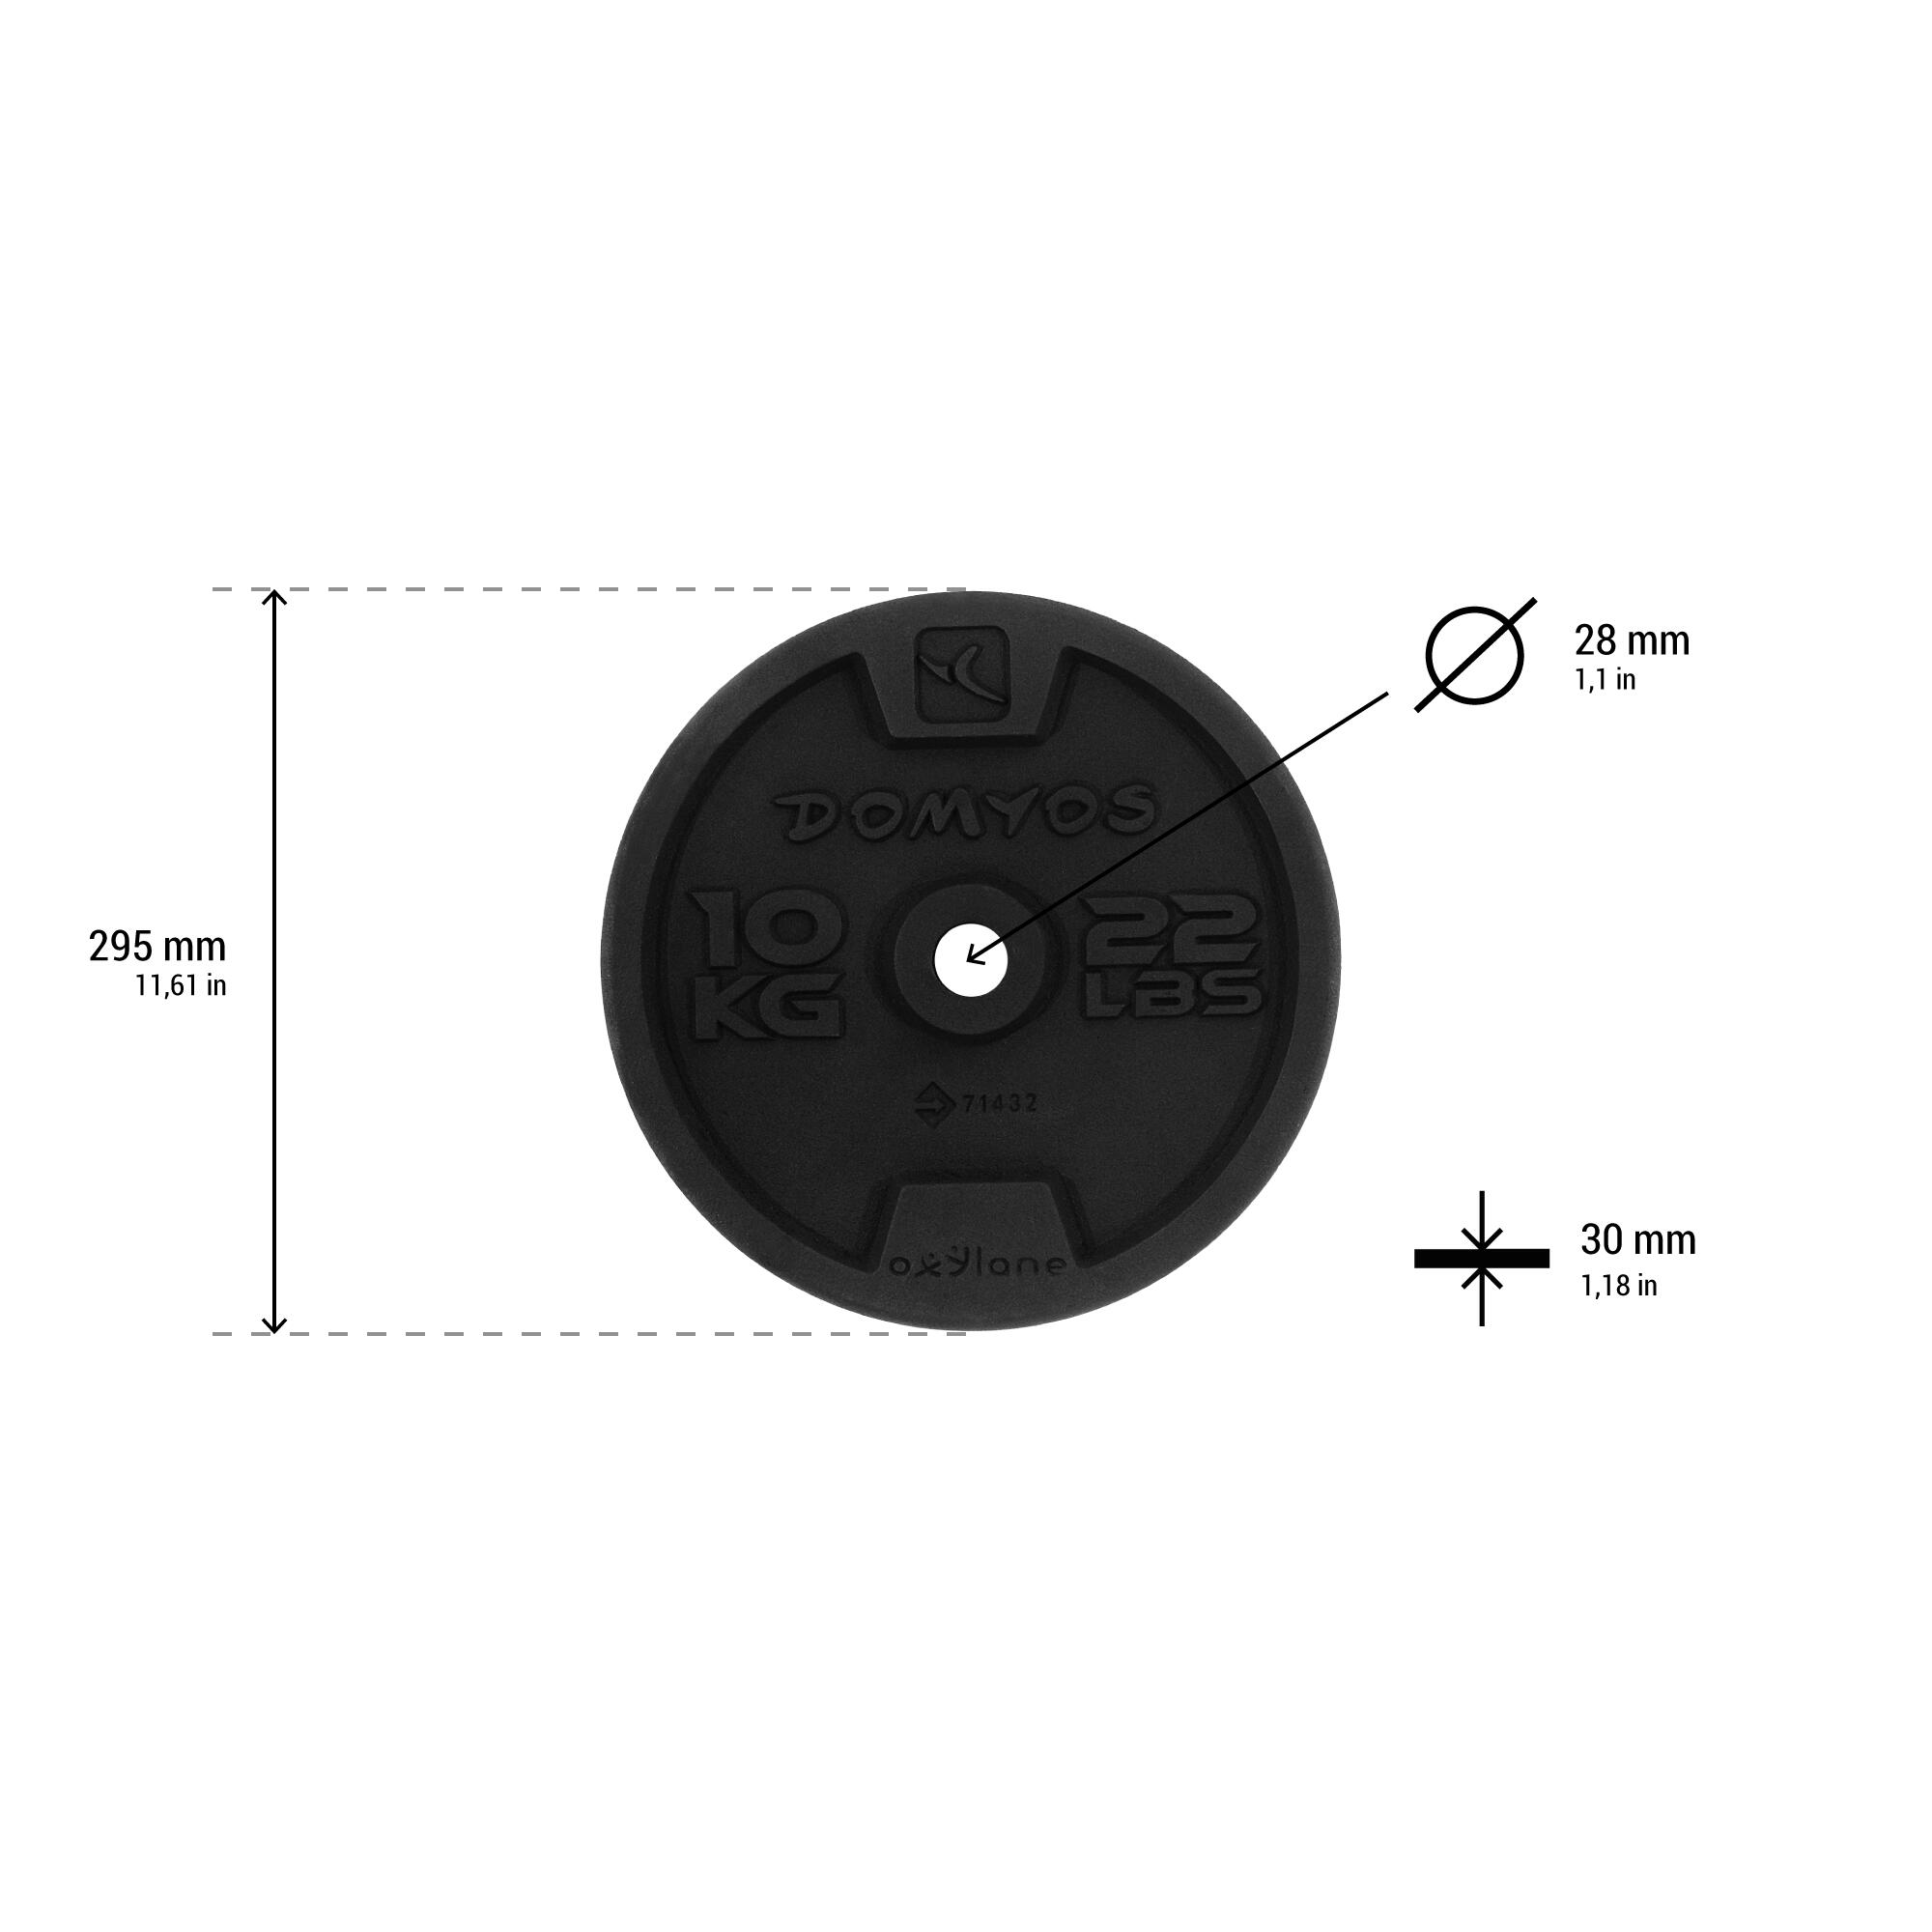 28 mm Cast Iron Weight Plate - MDF Black - CORENGTH